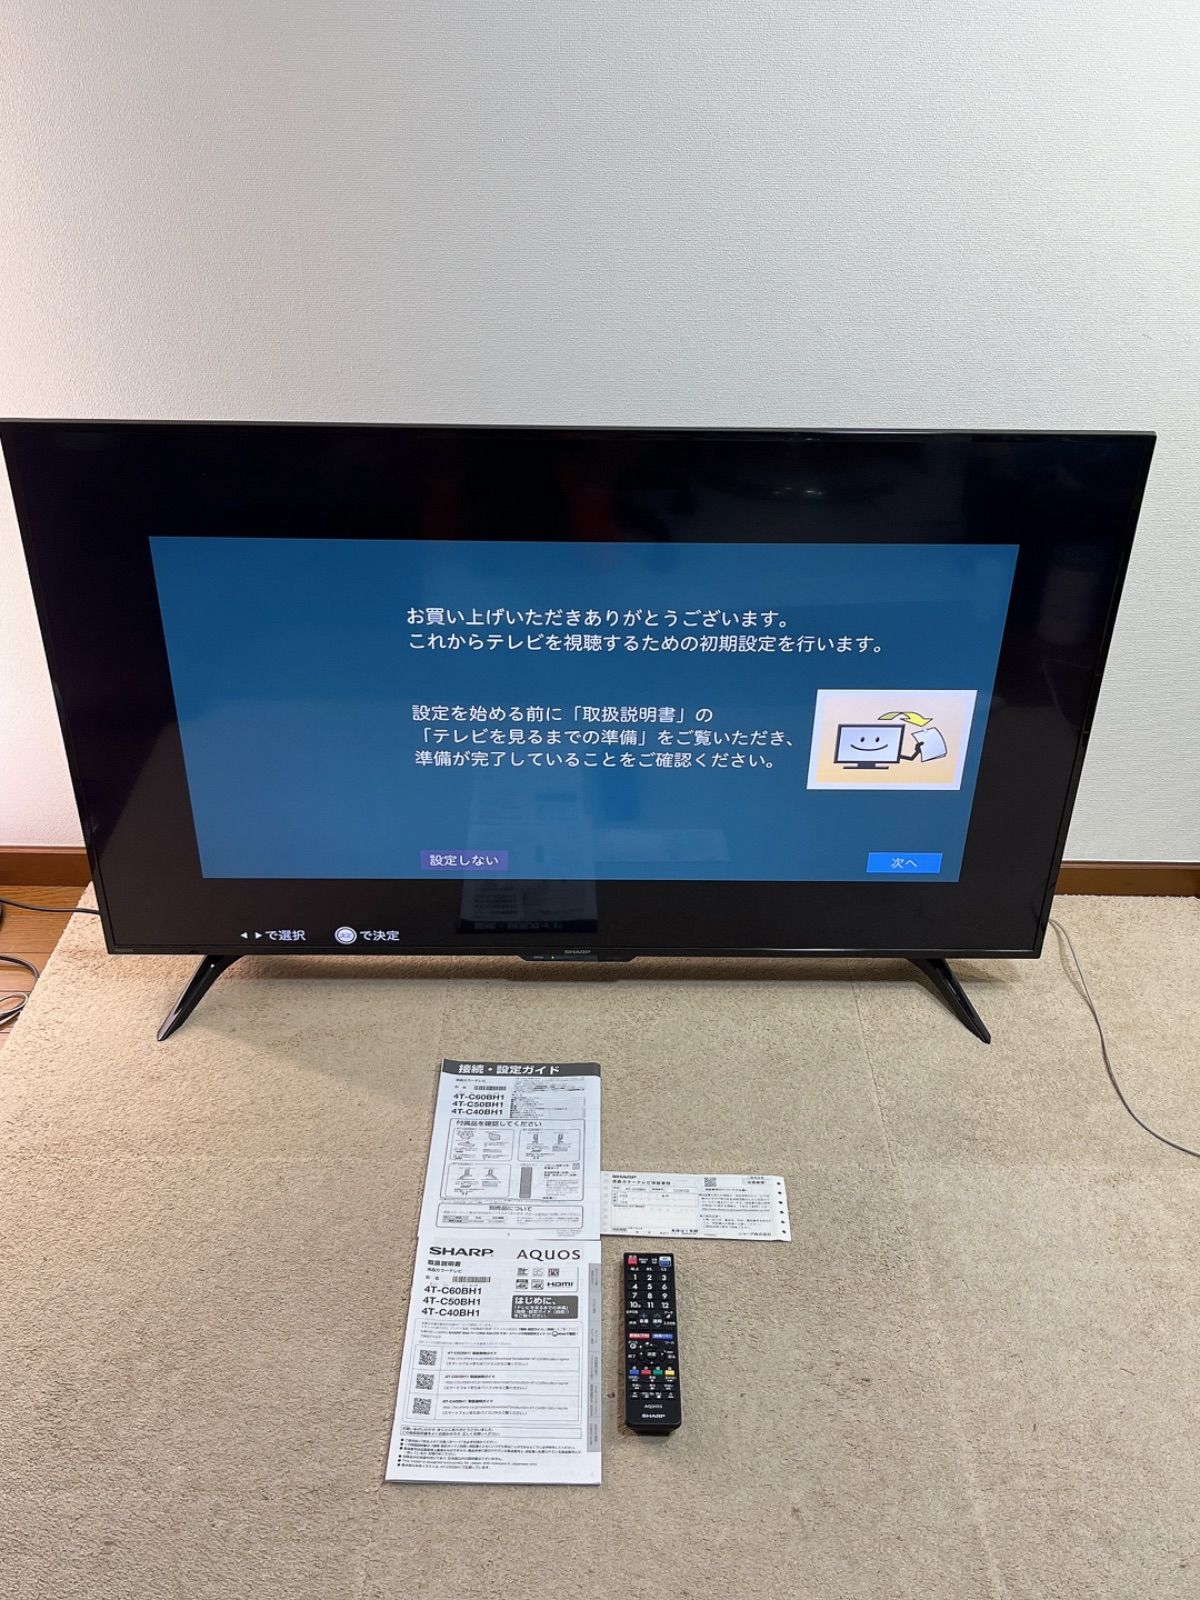 4K液晶テレビ 50インチ SHARP 4T-C50BH1 - テレビ